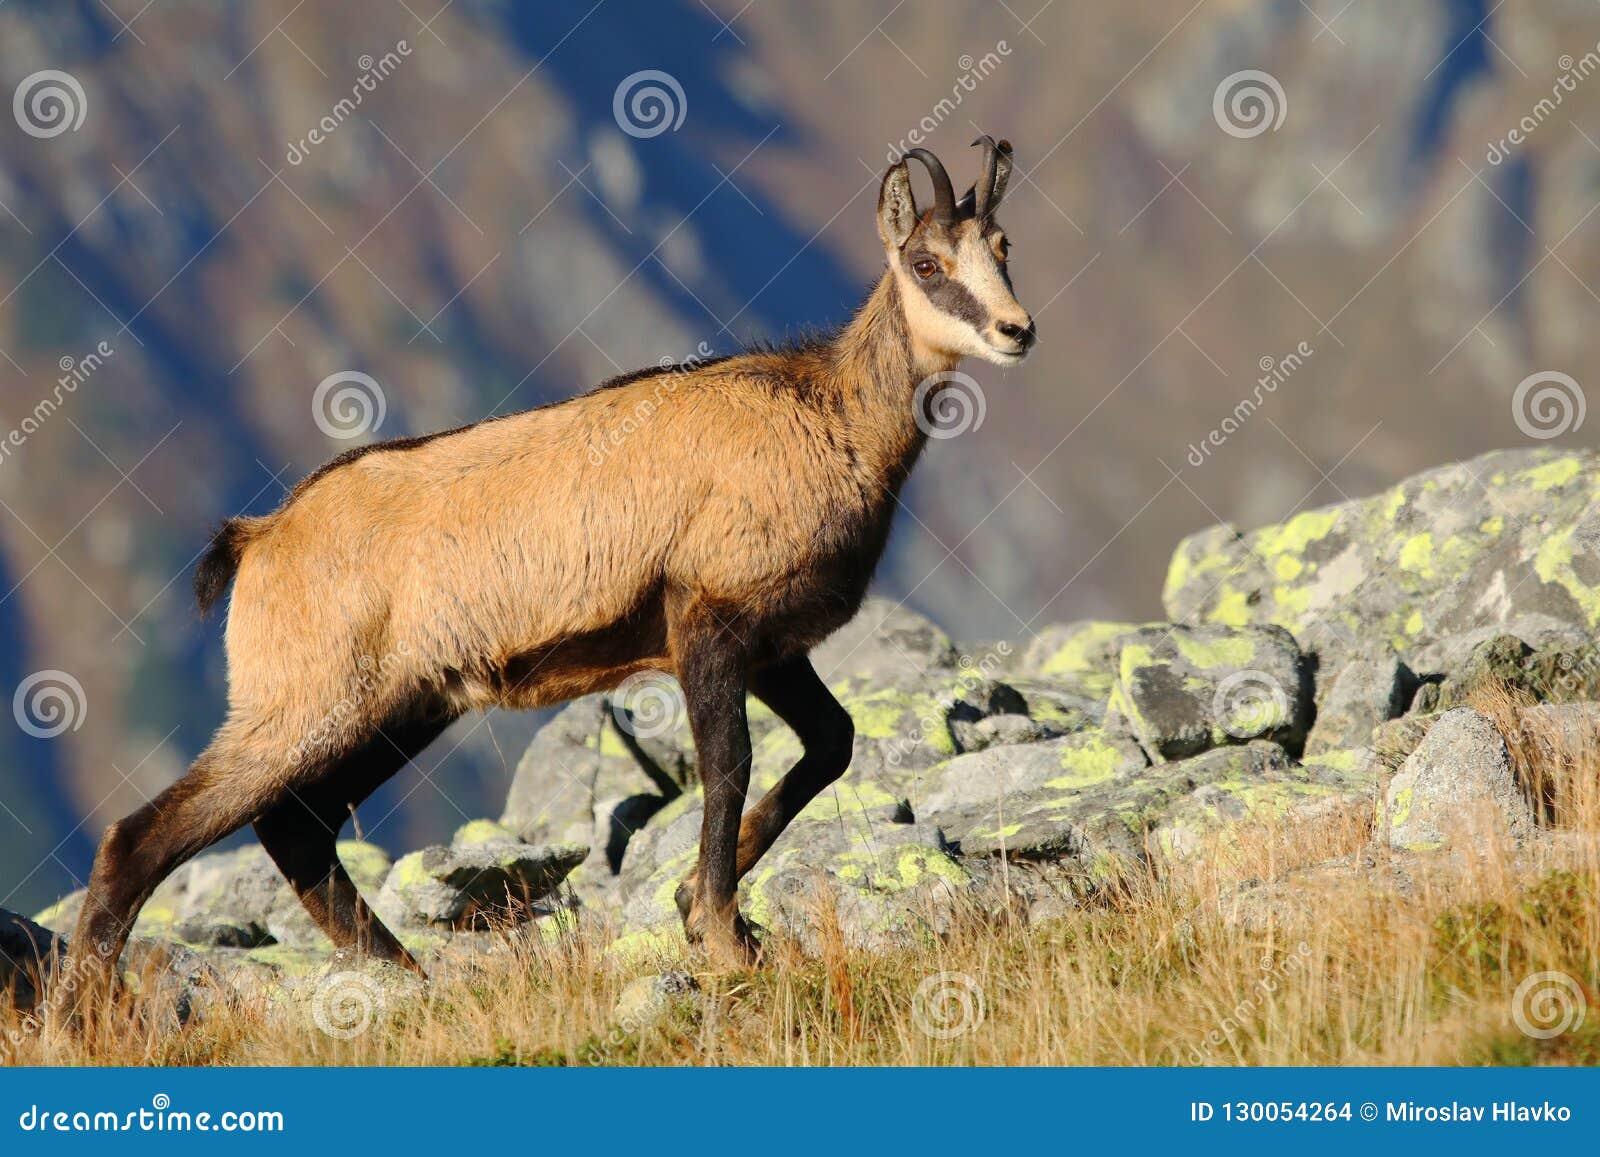 Chamois Antelope